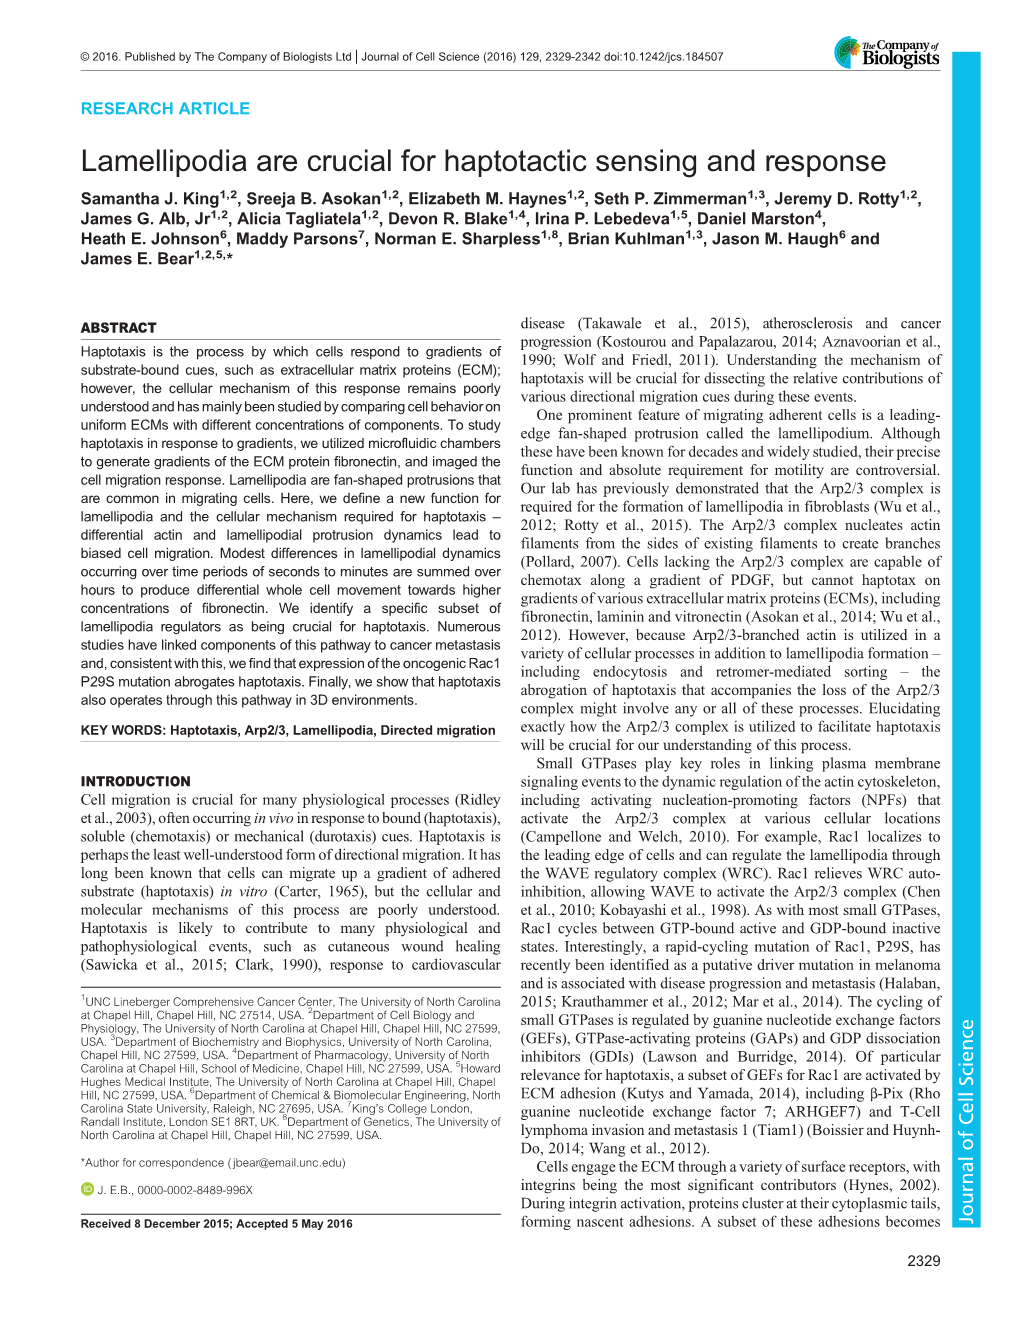 Lamellipodia Are Crucial for Haptotactic Sensing and Response Samantha J